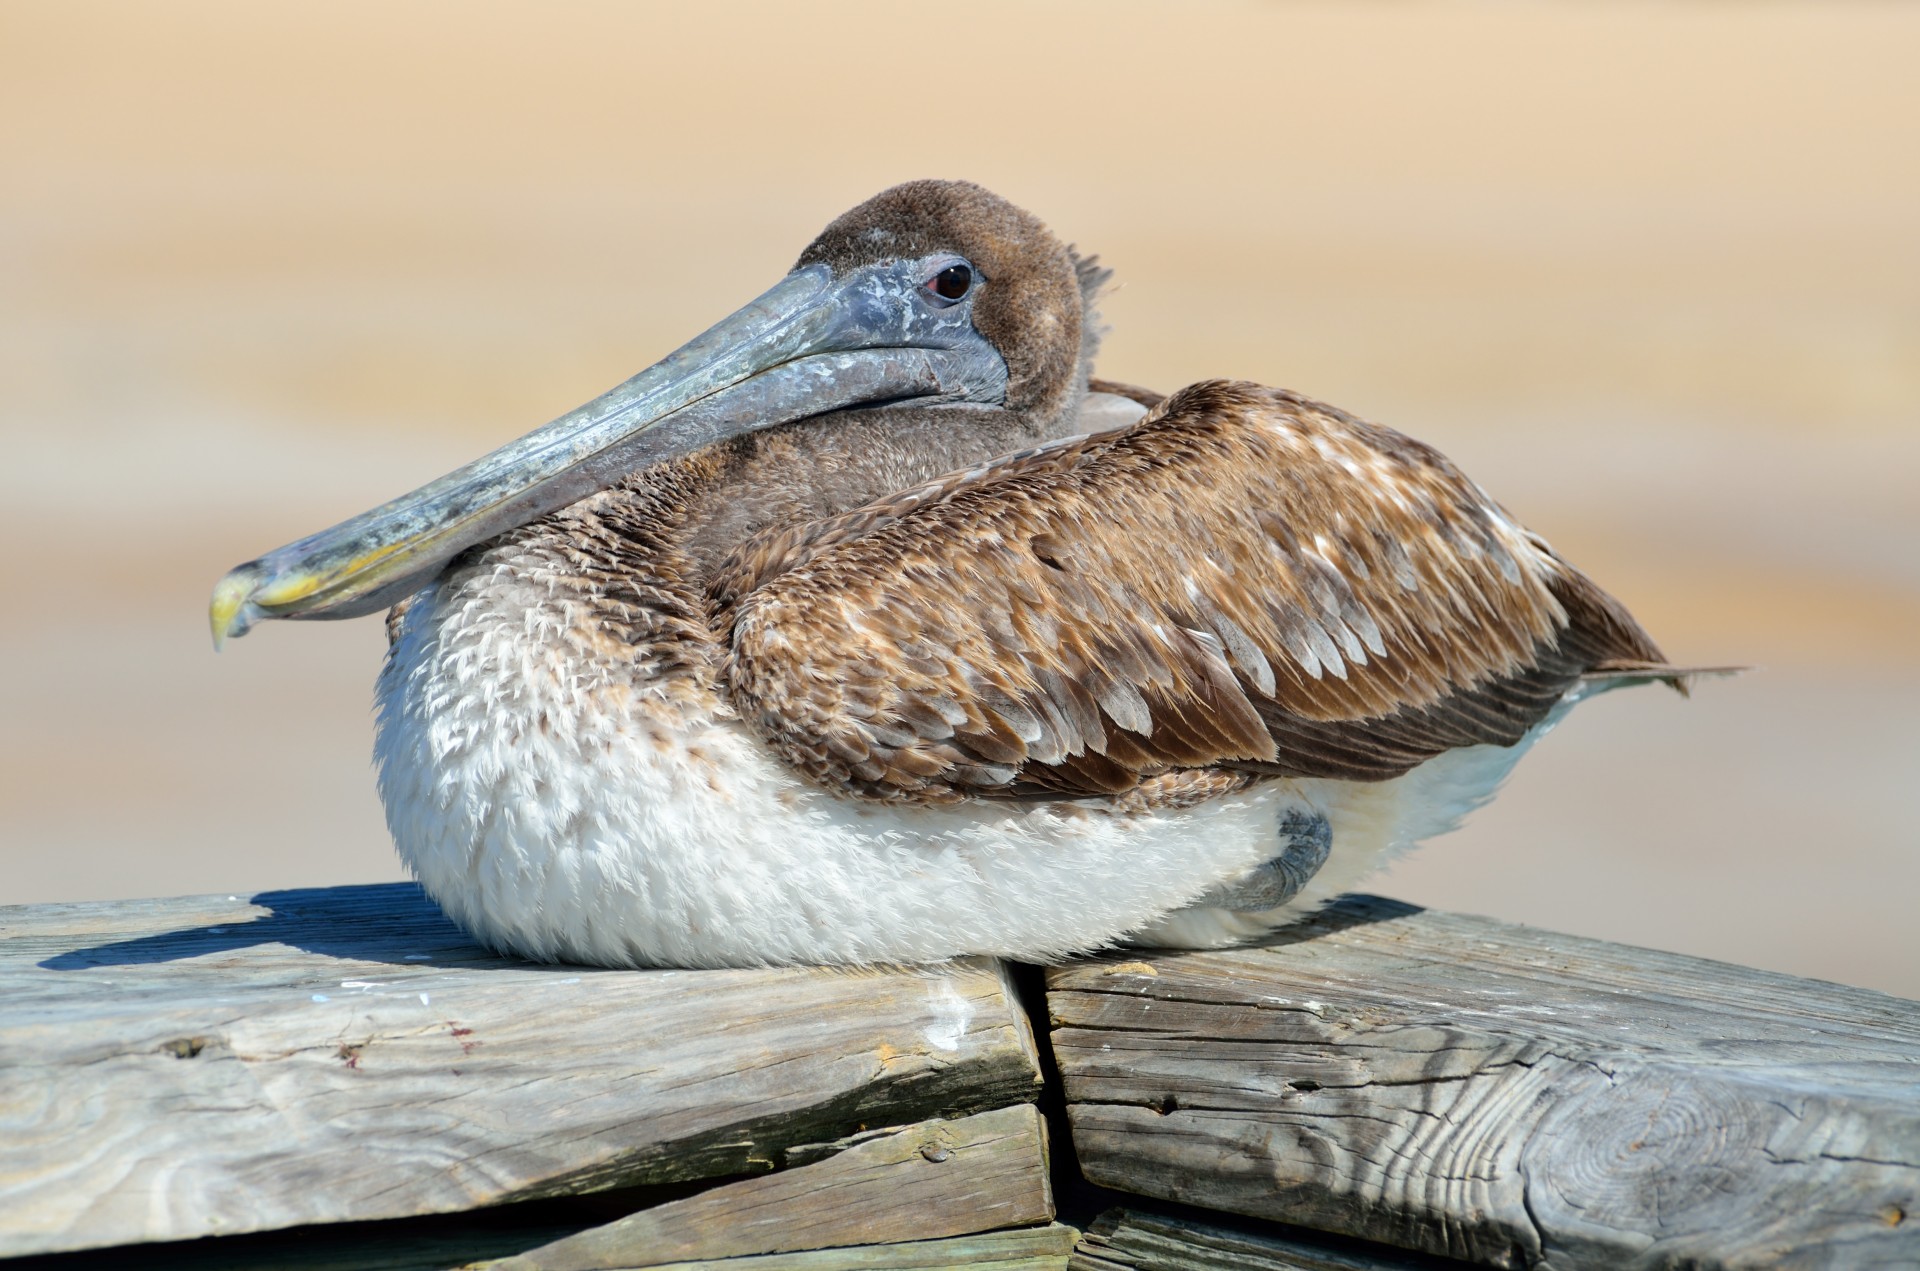 Pelican Resting